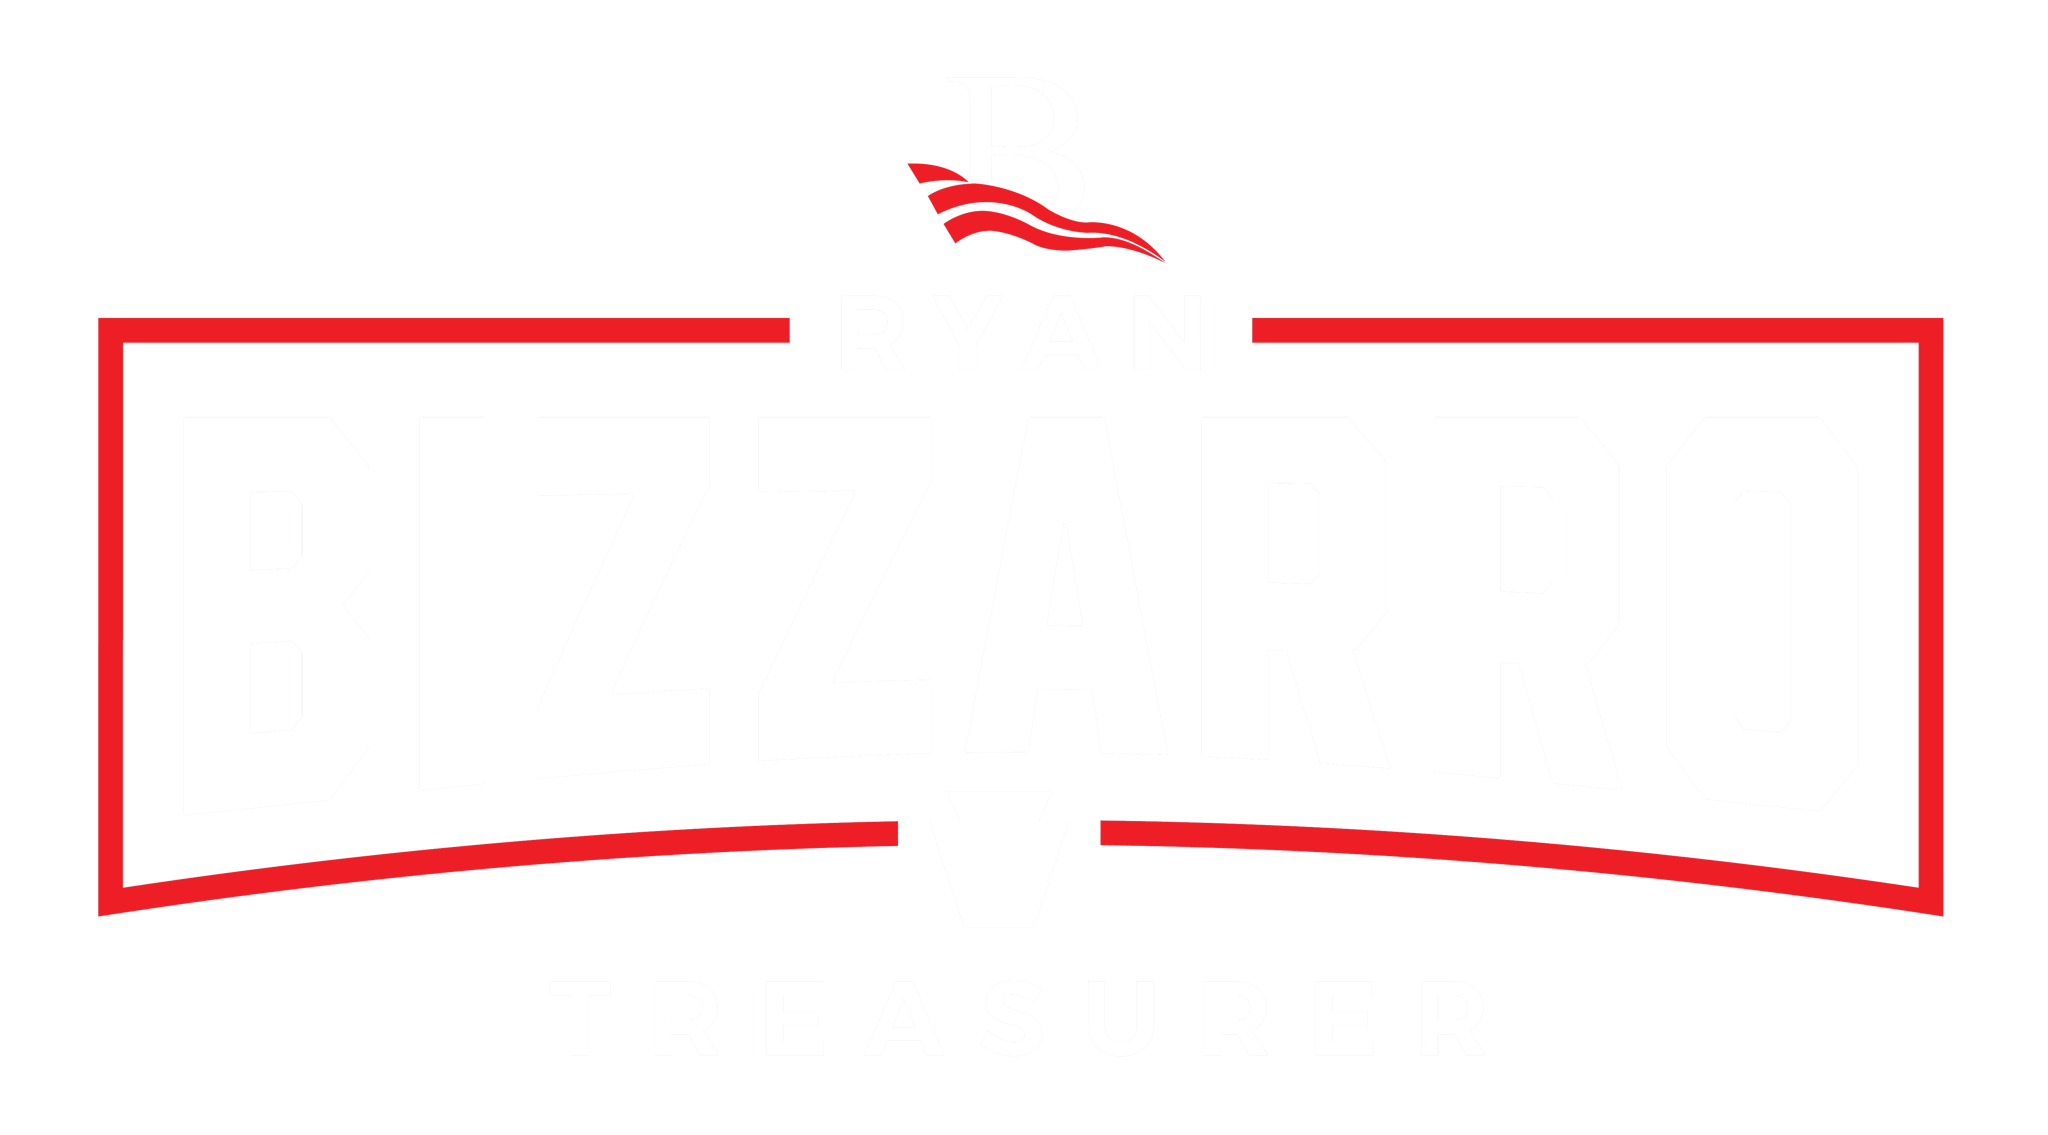 Ryan Bizzarro for State Treasurer logo